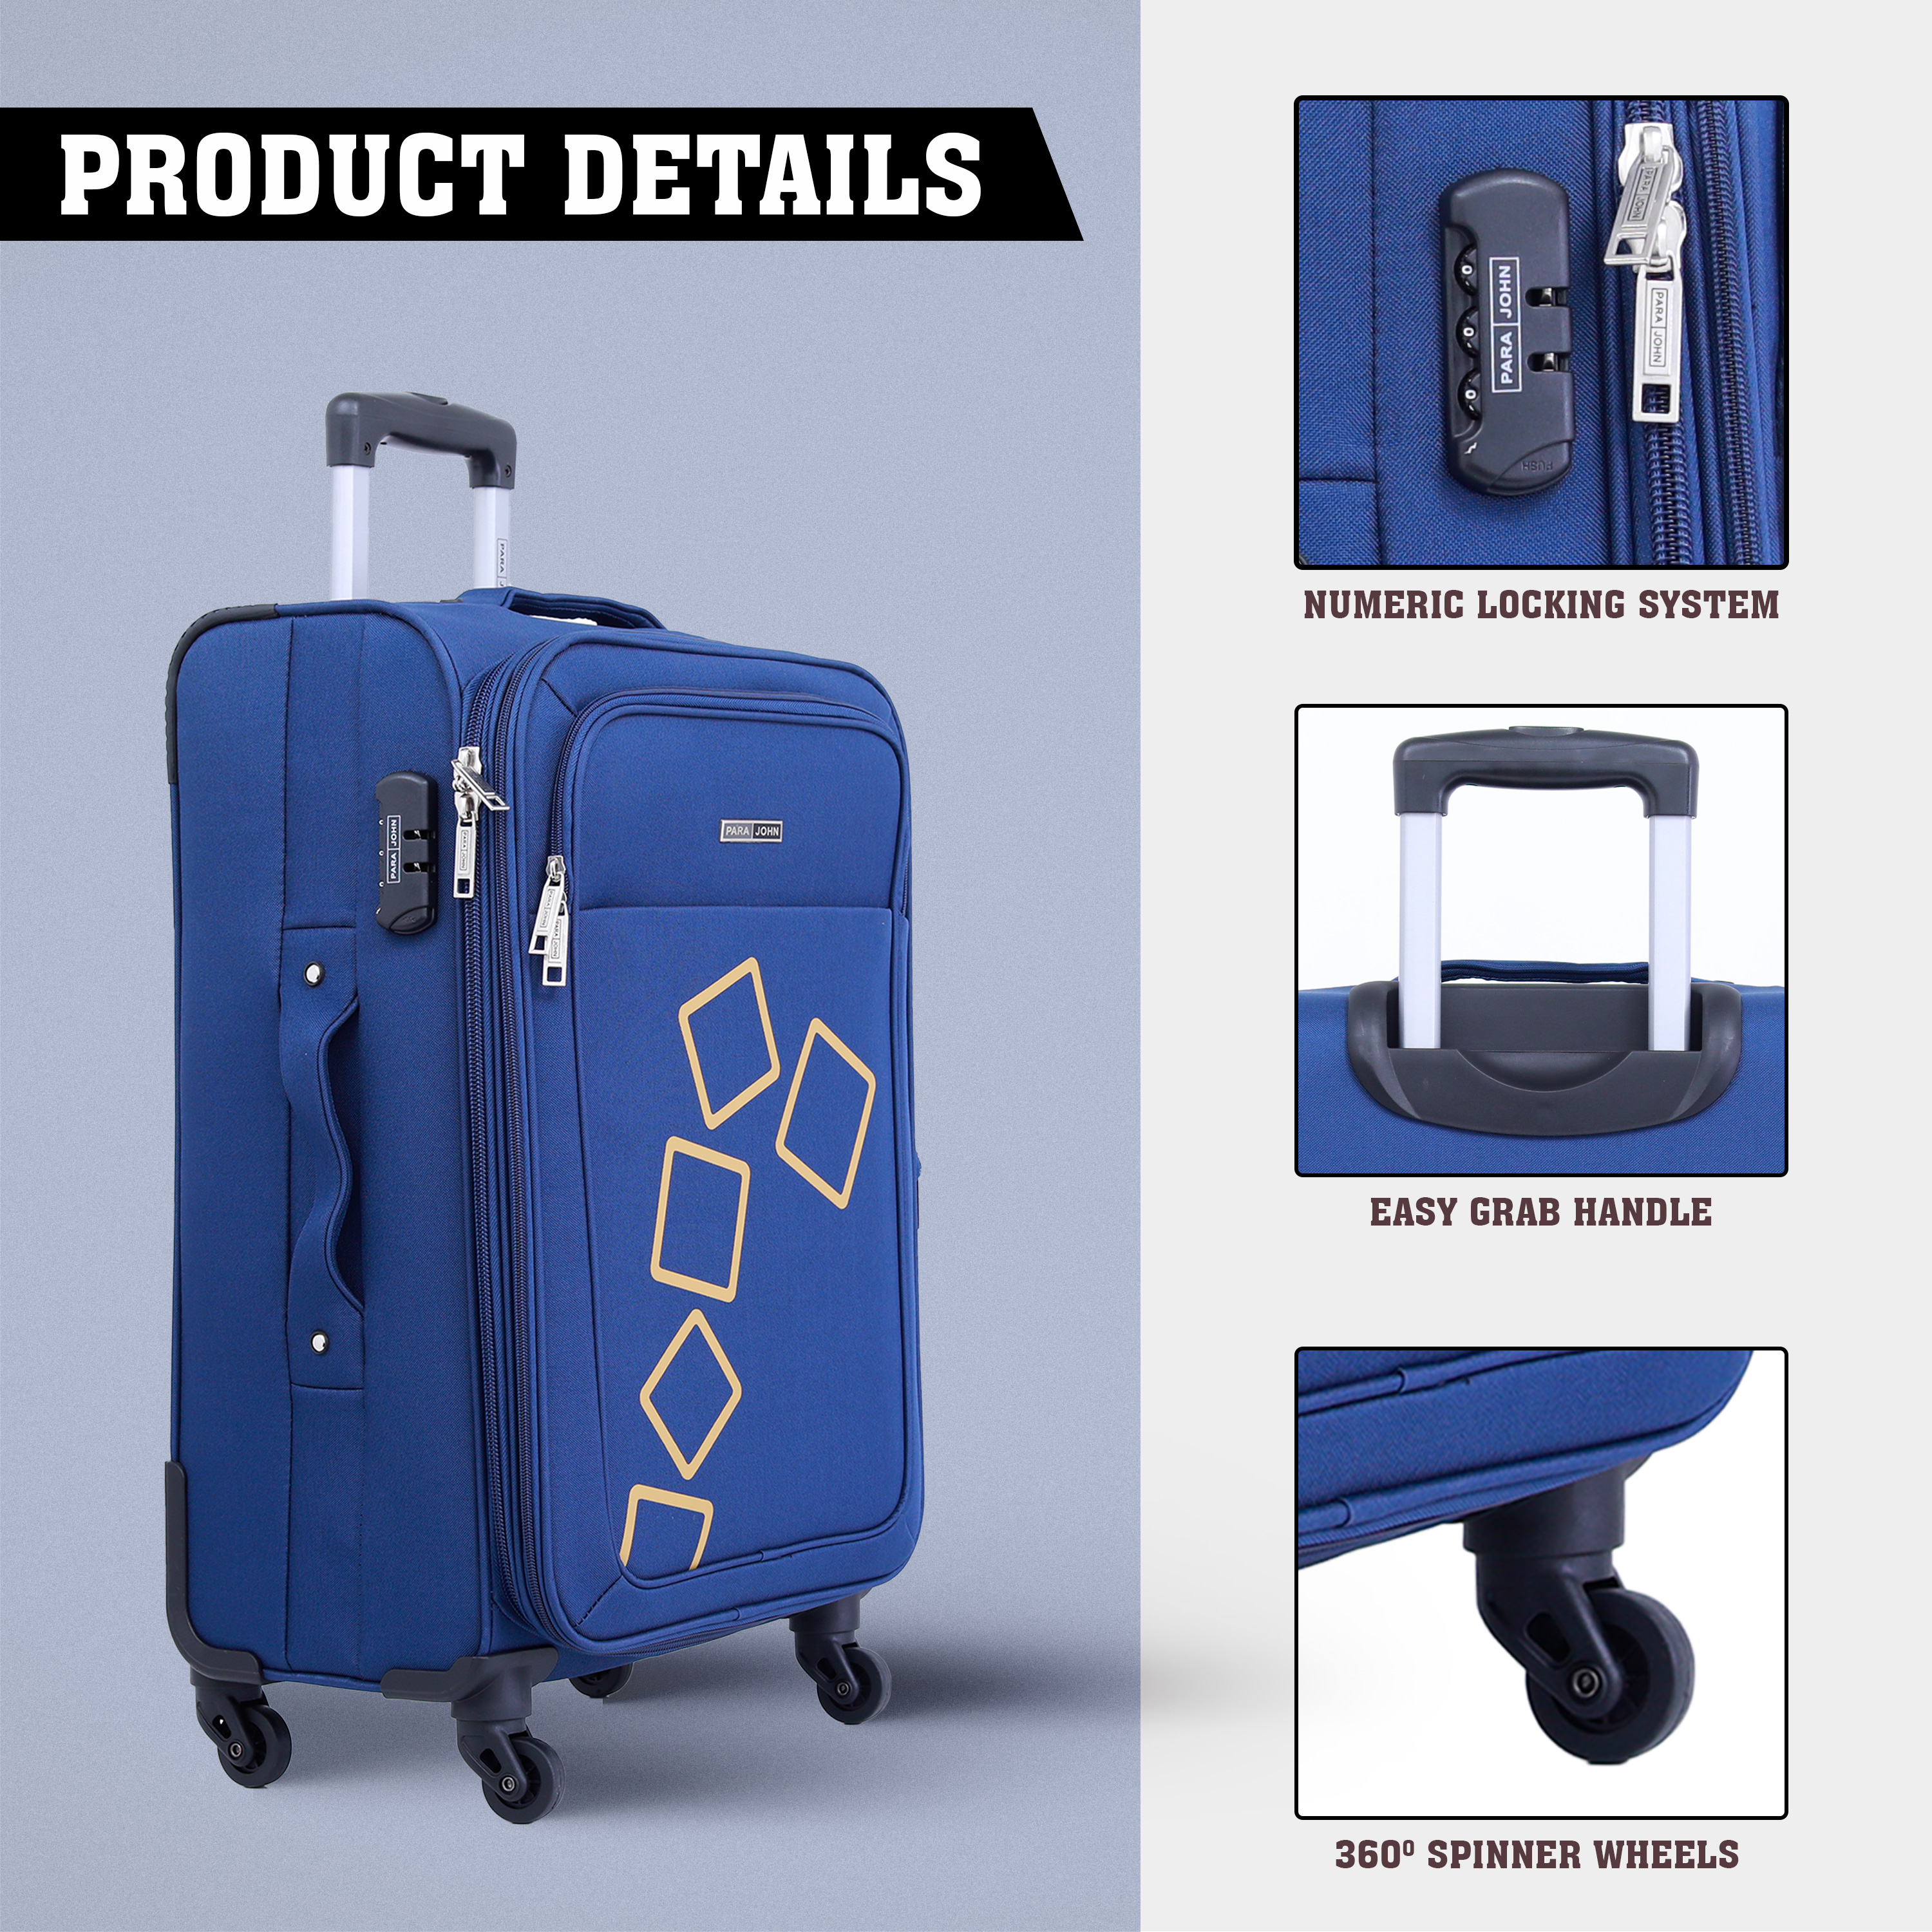 PARA JOHN Travel Luggage Suitcase Set of 4 - Trolley Bag, Carry On